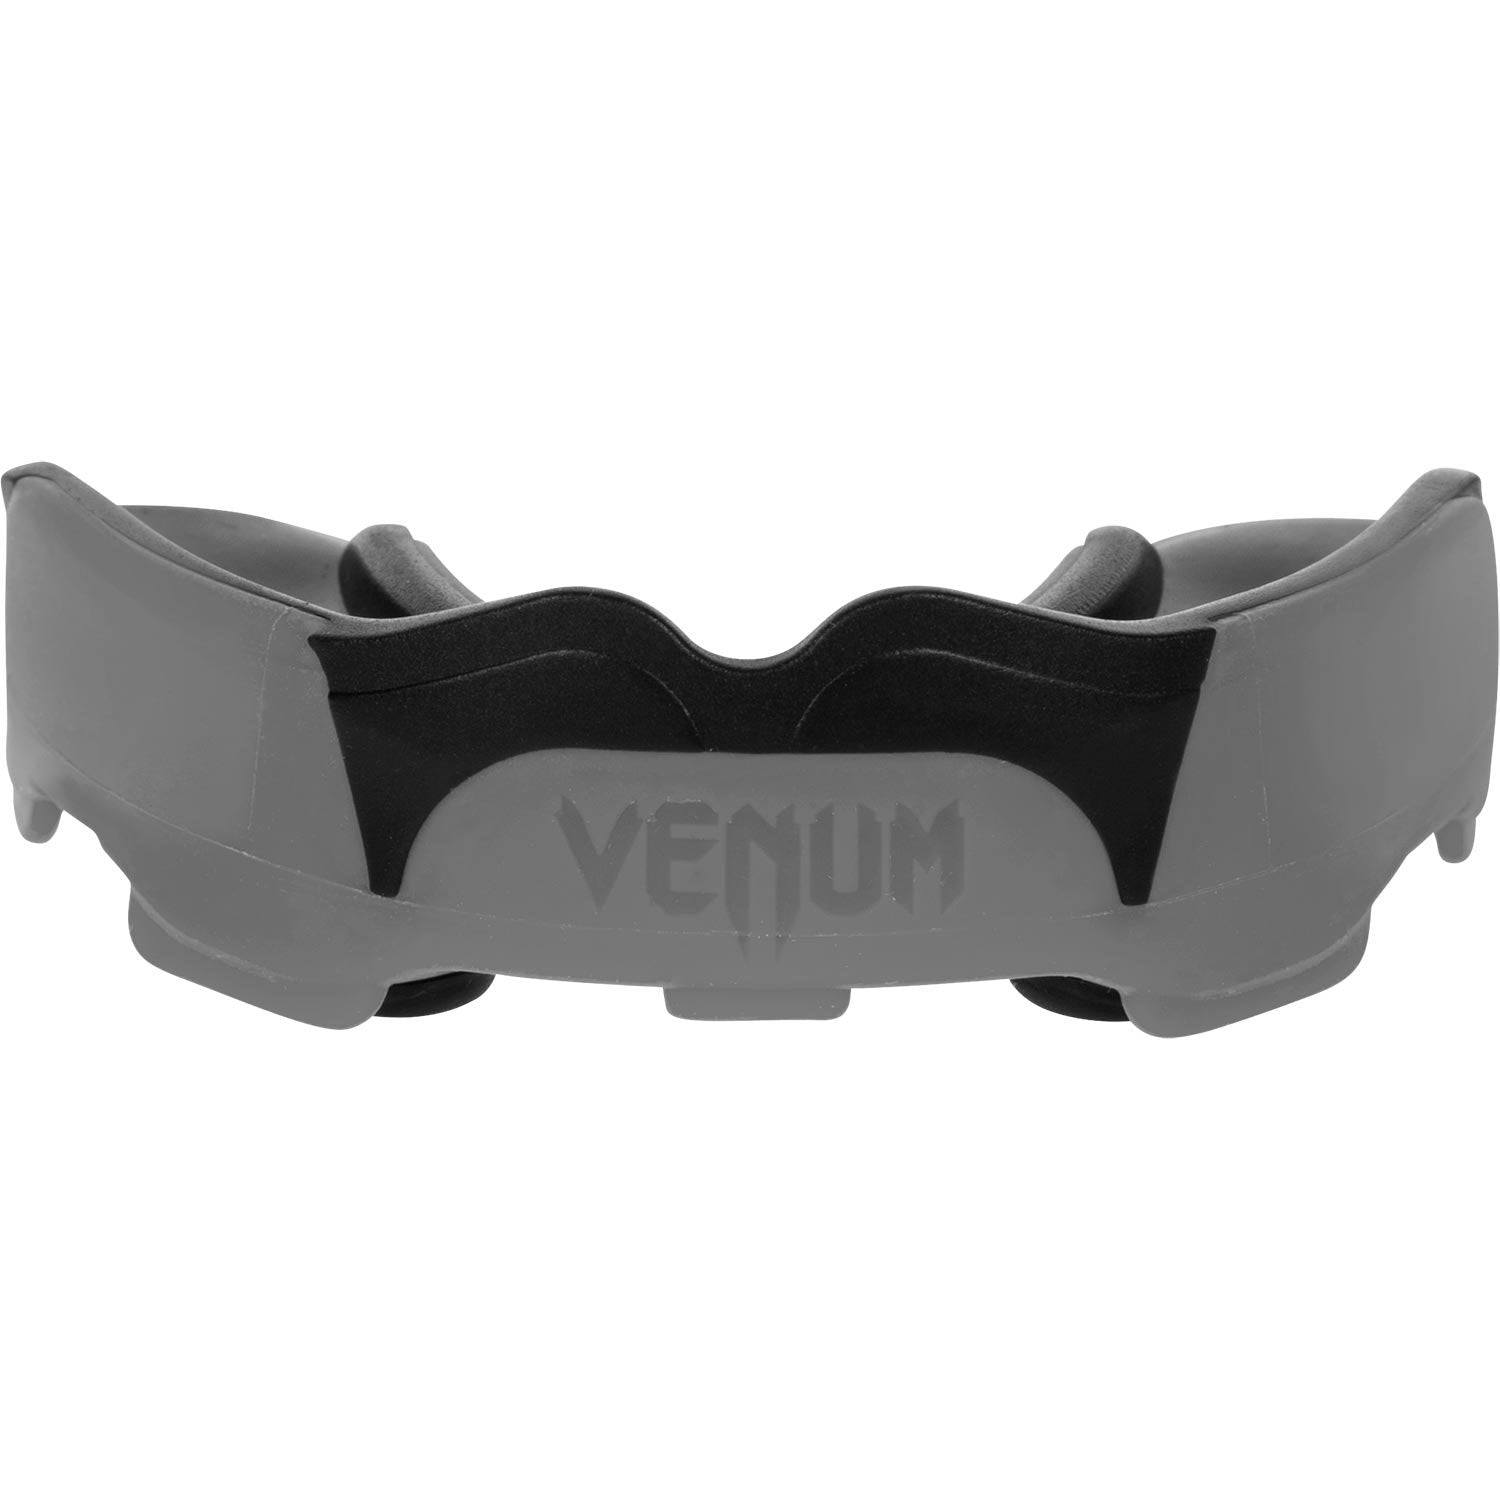 Venum Predator Mouthguard - Best Price online Prokicksports.com